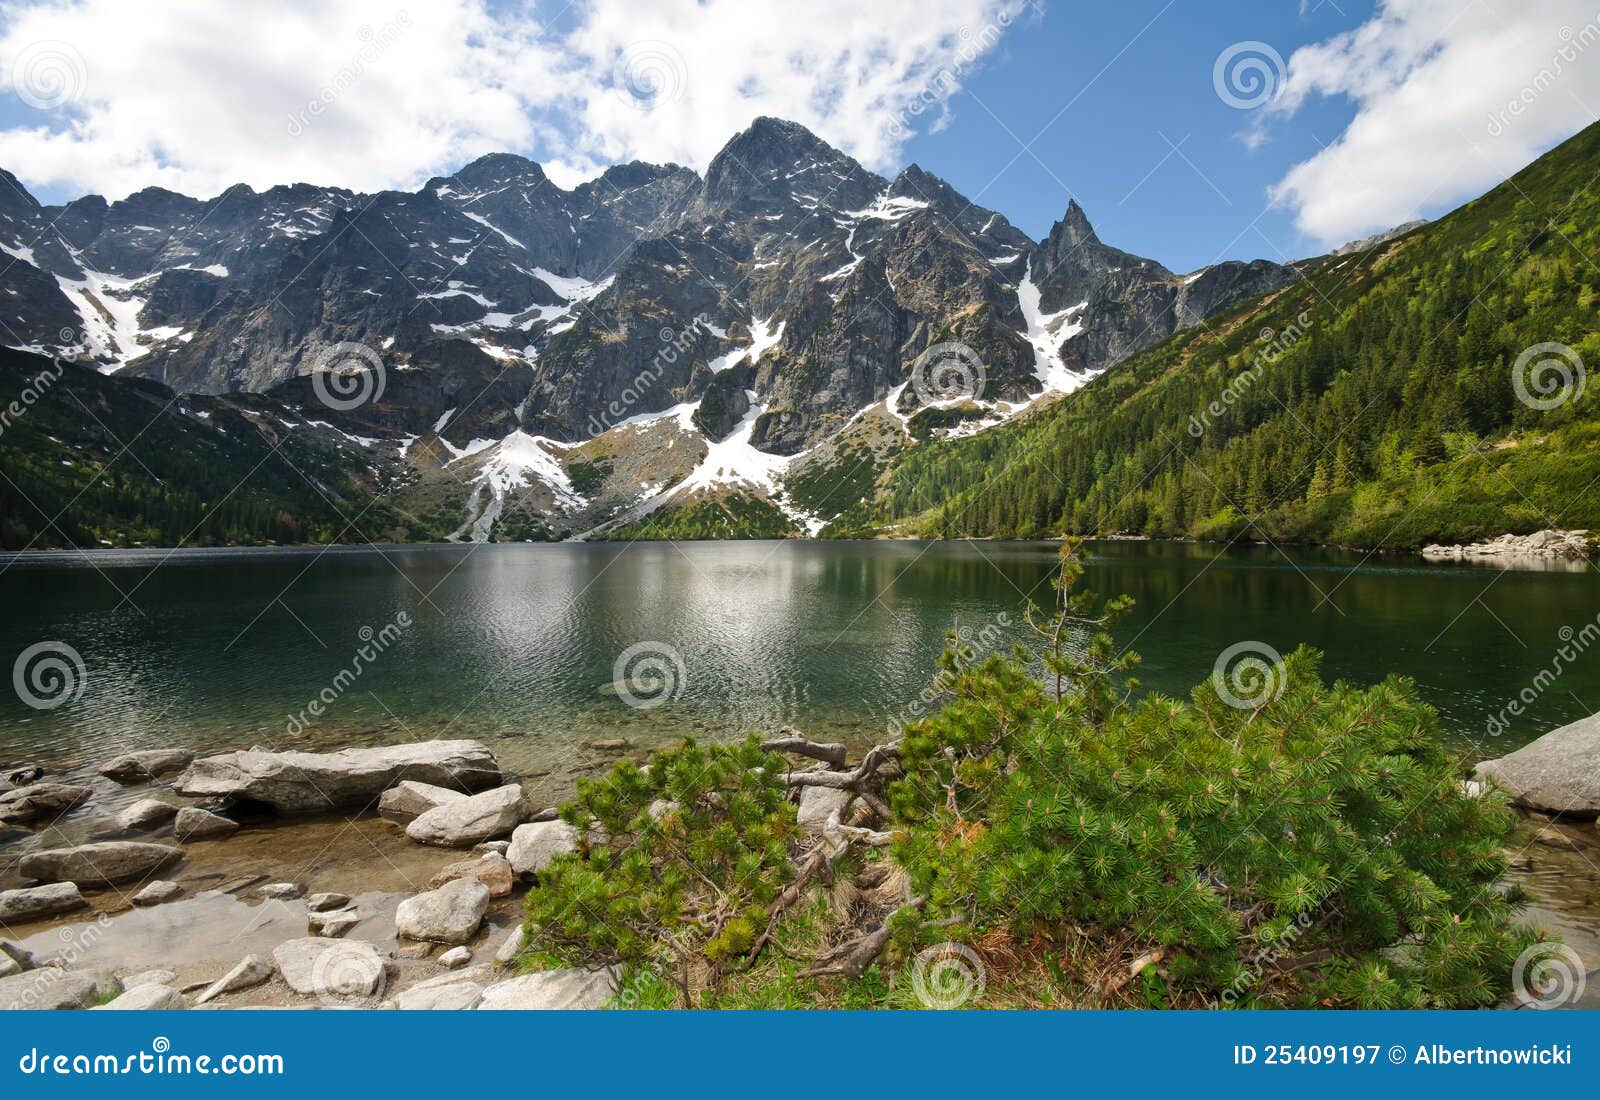 polish tatra mountains morskie oko lake